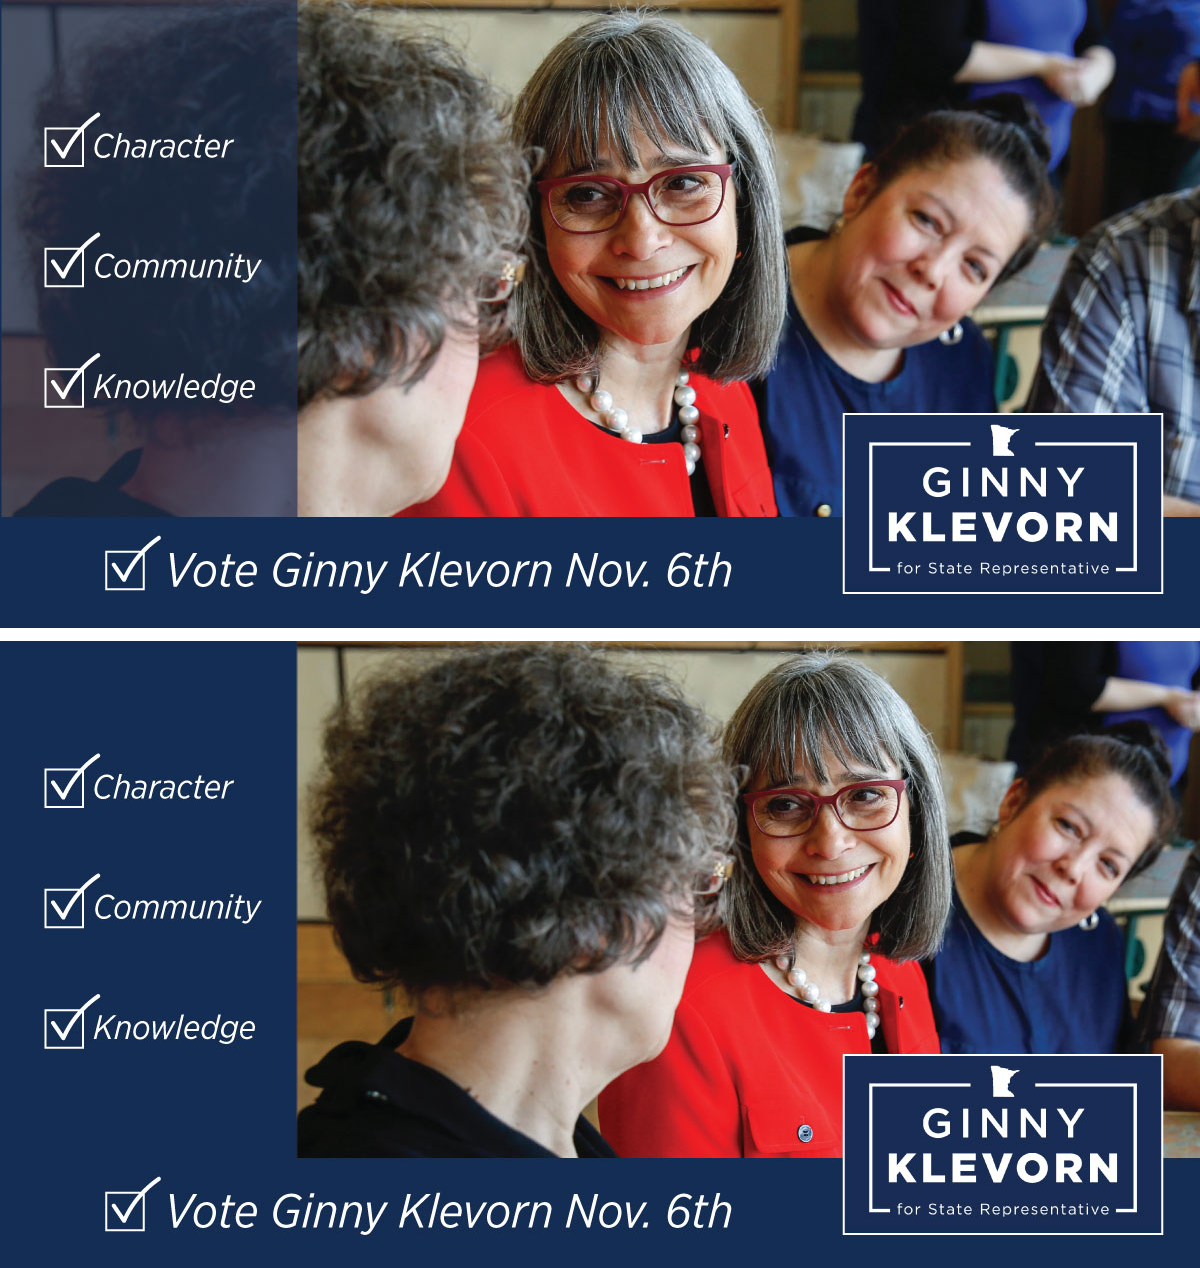 Client: Ginny Klevorn MN State Representative candidate/Storefront Political Media. Description: Facebook web banner design for state representative candidate for Minnesota.